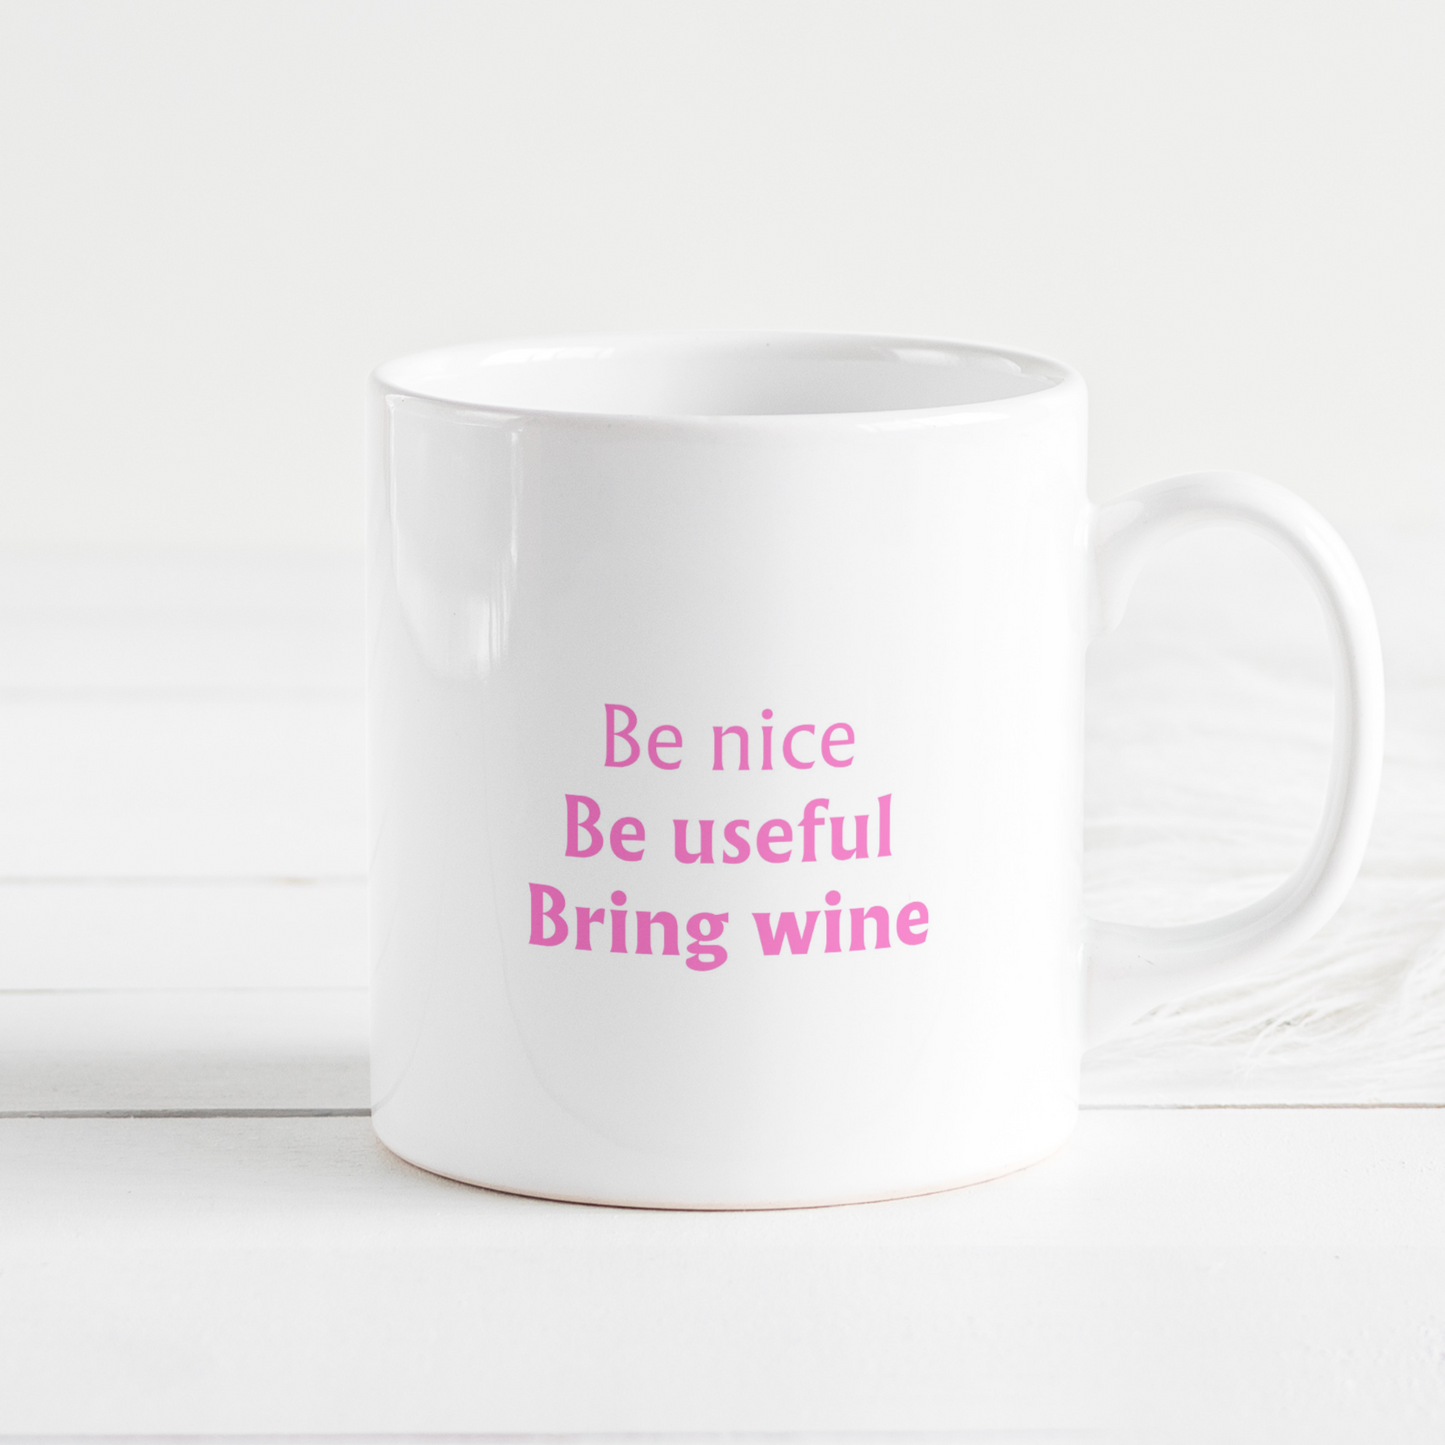 Be nice, be useful, bring wine - Mug